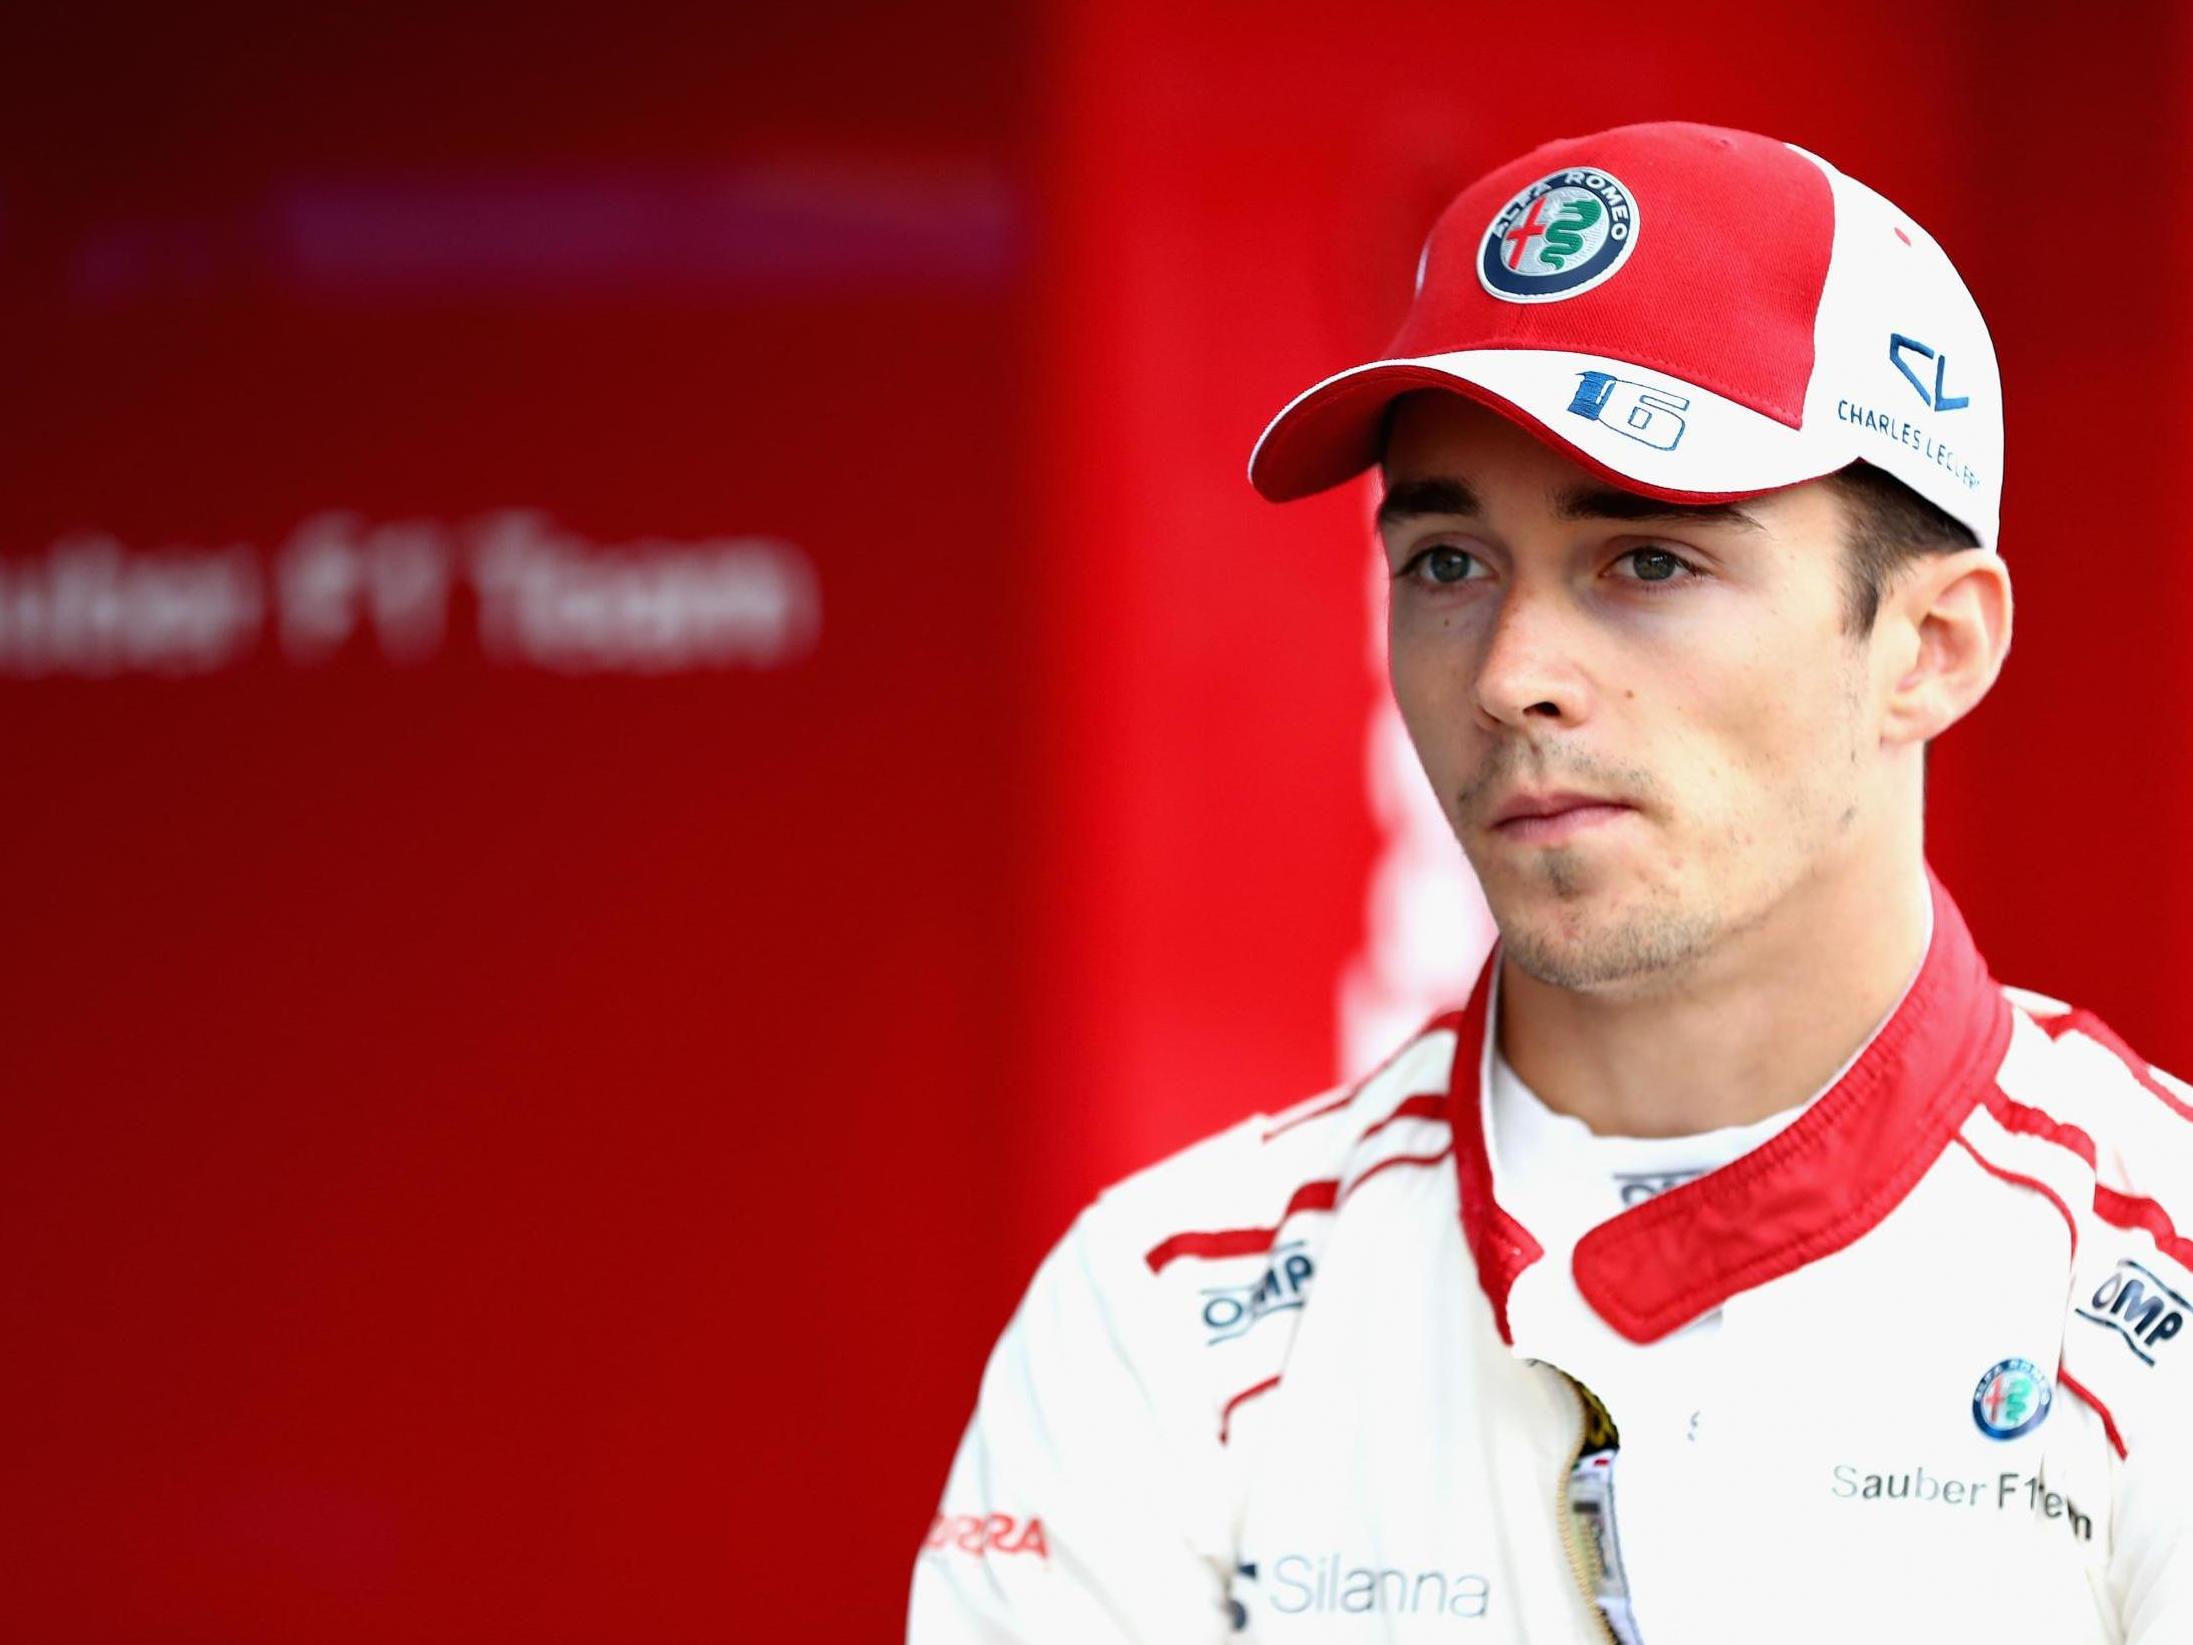 Charles Leclerc will replace Kimi Raikkonen for the 2019 season